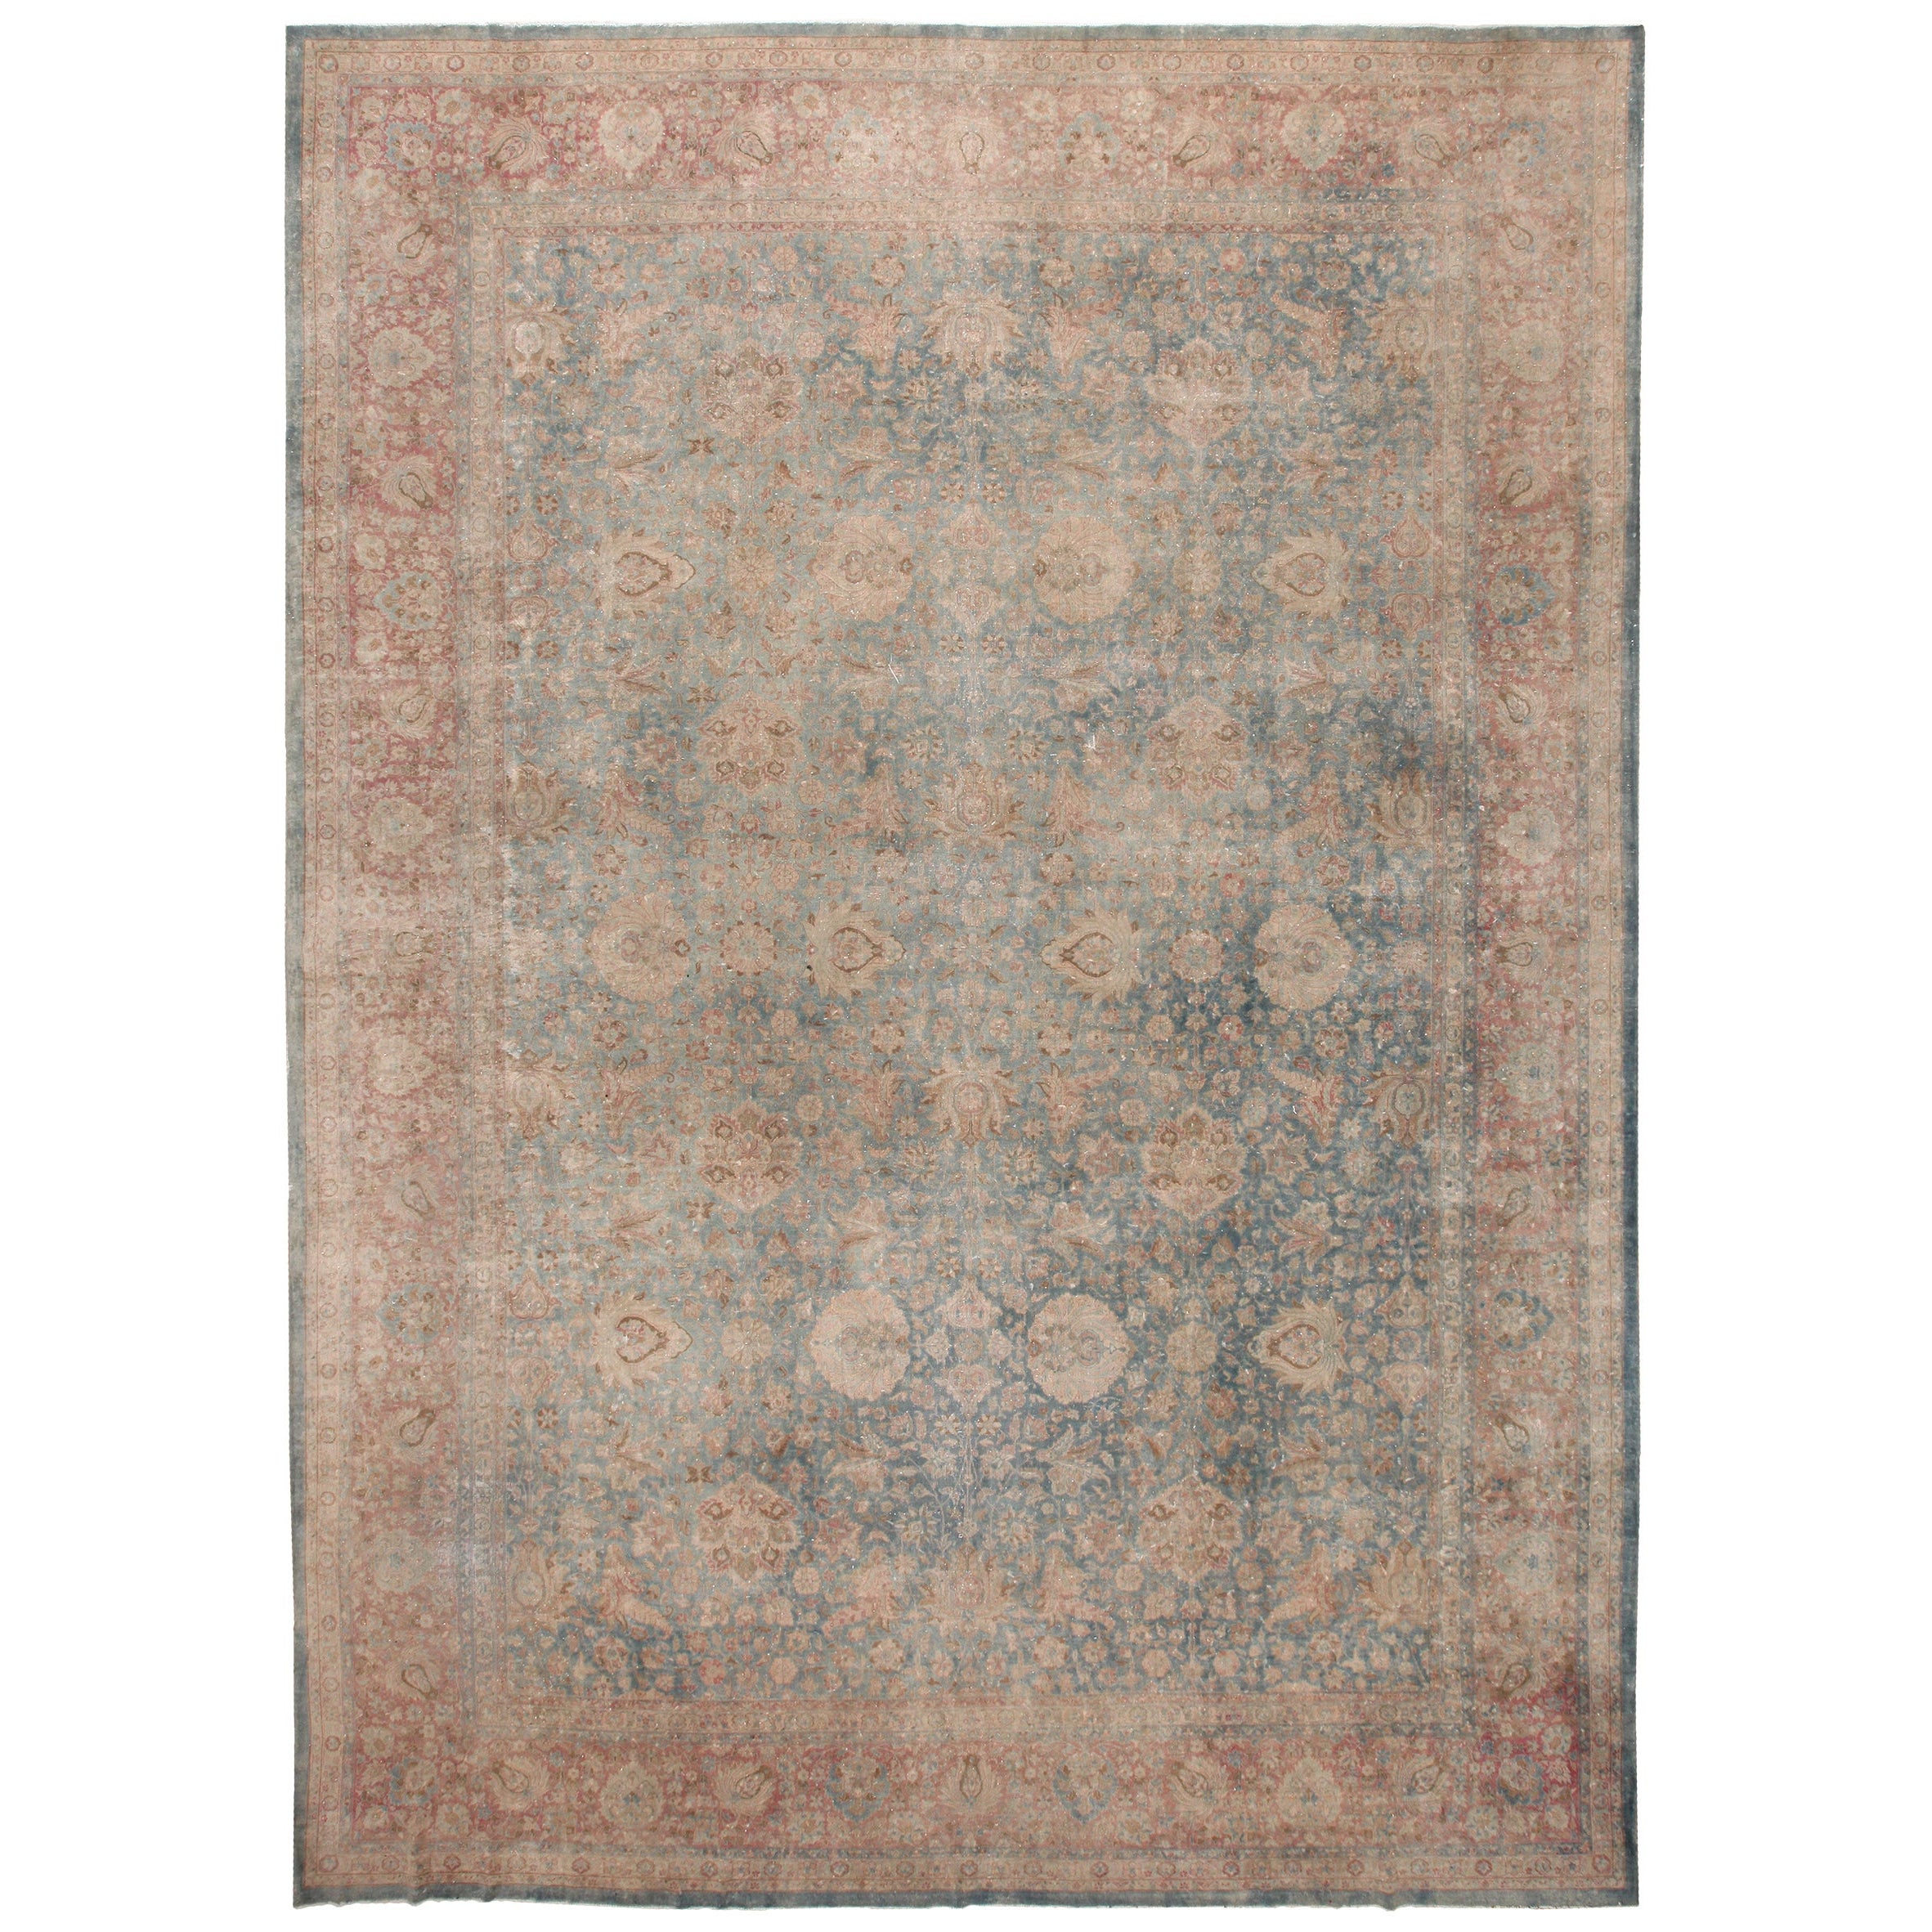 Beautiful Antique Persian Kerman Carpet 13'10" x 20' For Sale